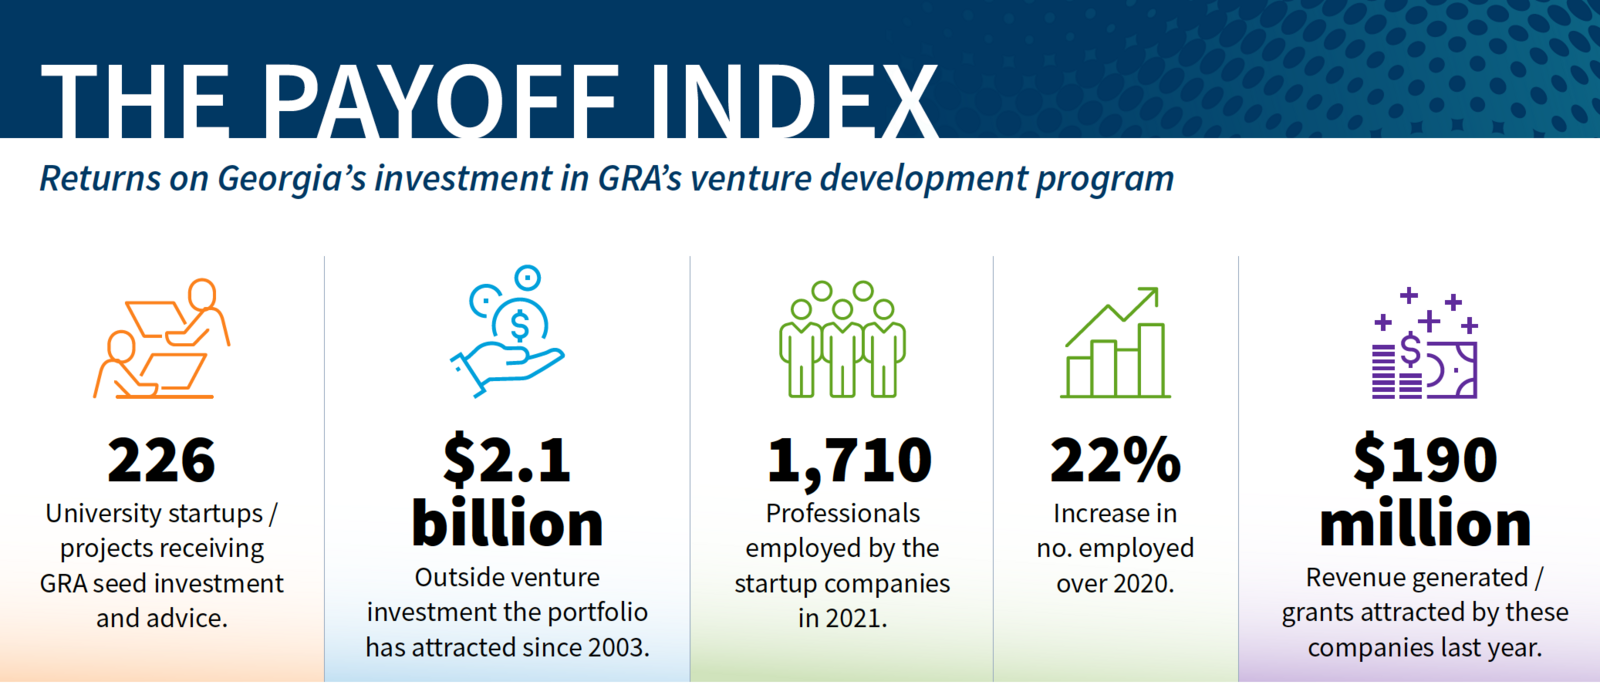 Annual and cumulative returns on GRA`s venture development program are very good news for Georgia.